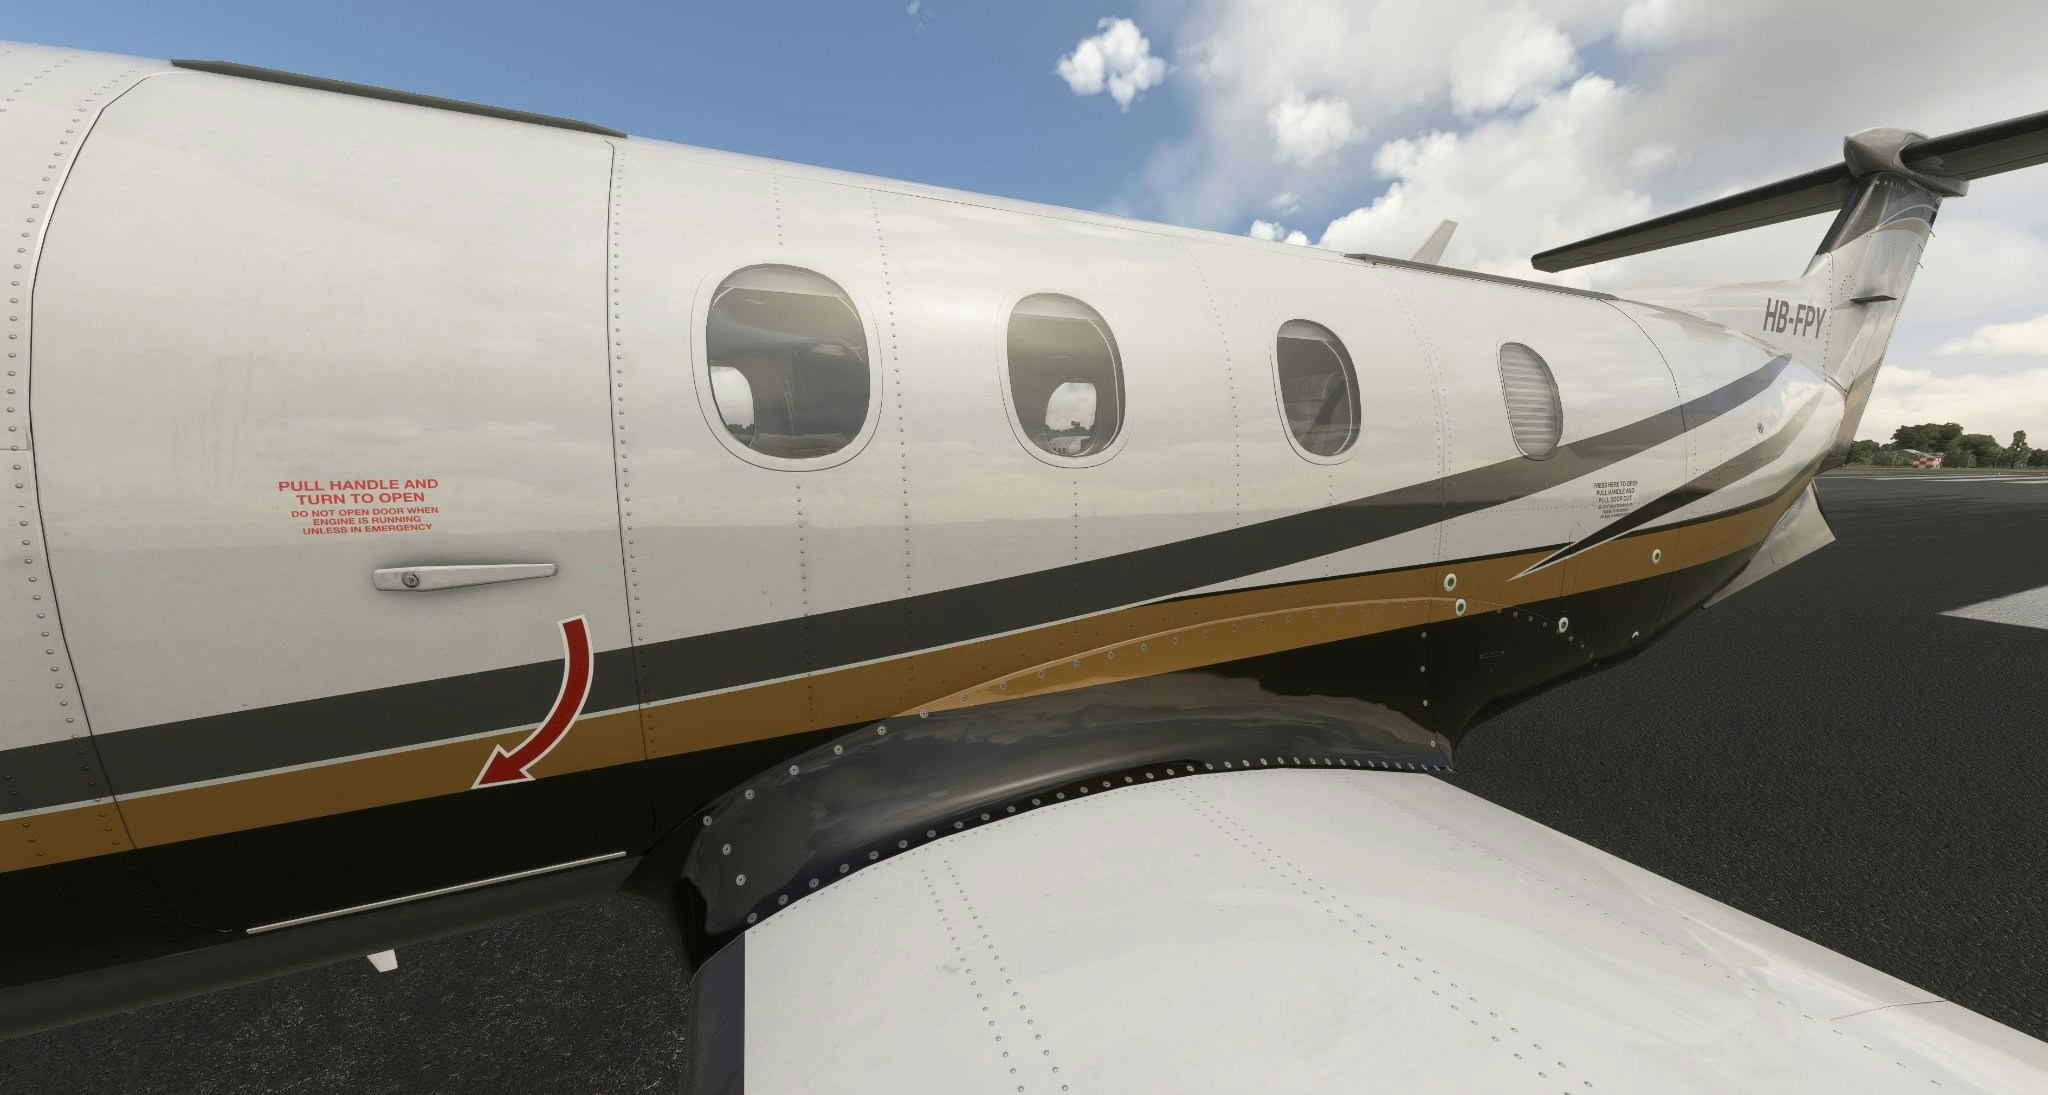 Carenado Shows off the Pilatus PC12; Hoping to Launch Soon